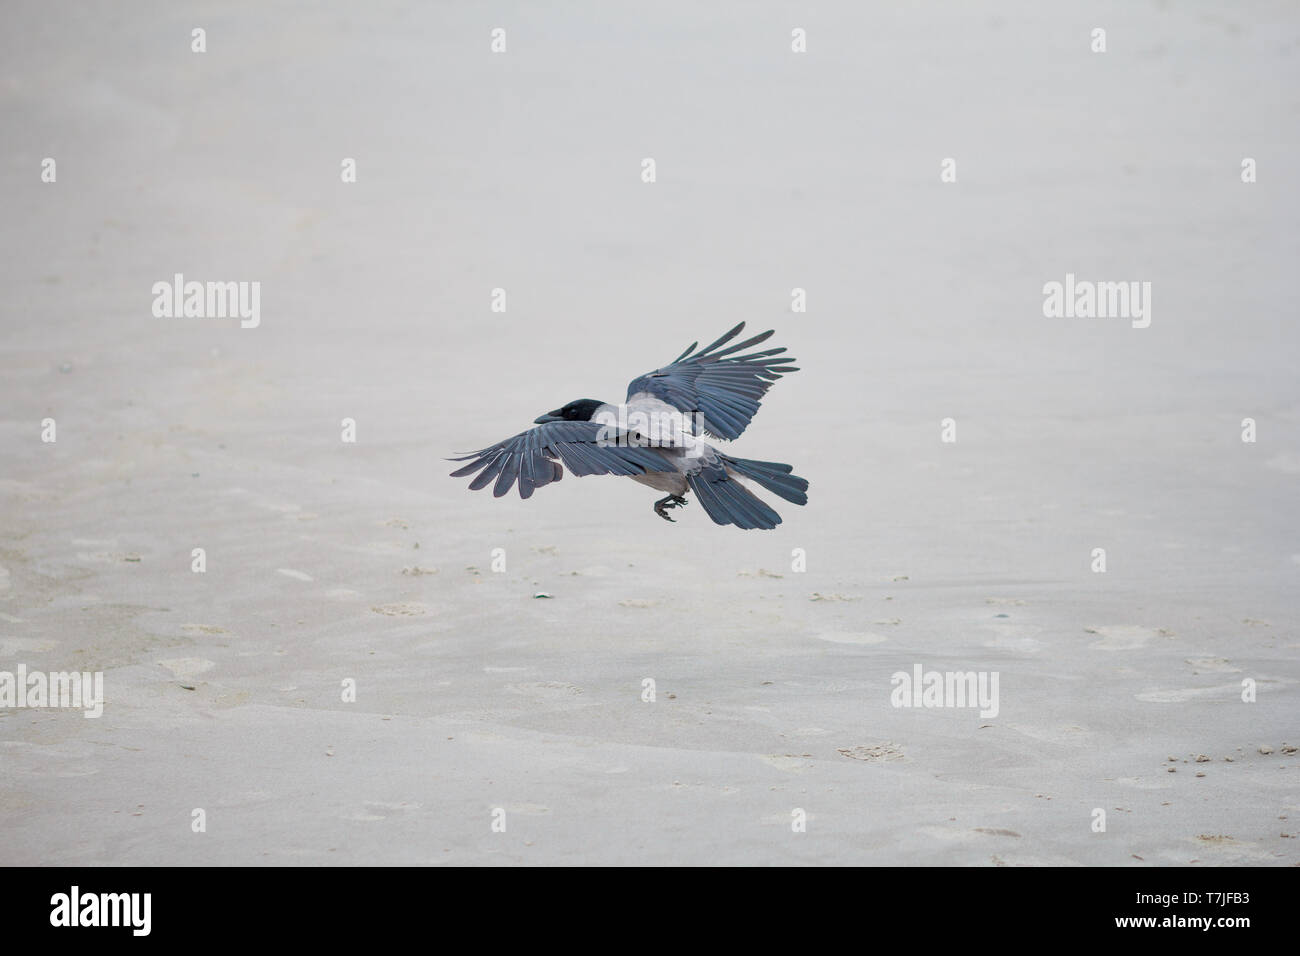 Fliegender Vogel am Strand Vejers Dänemark / flying bird on beach denmark Stock Photo